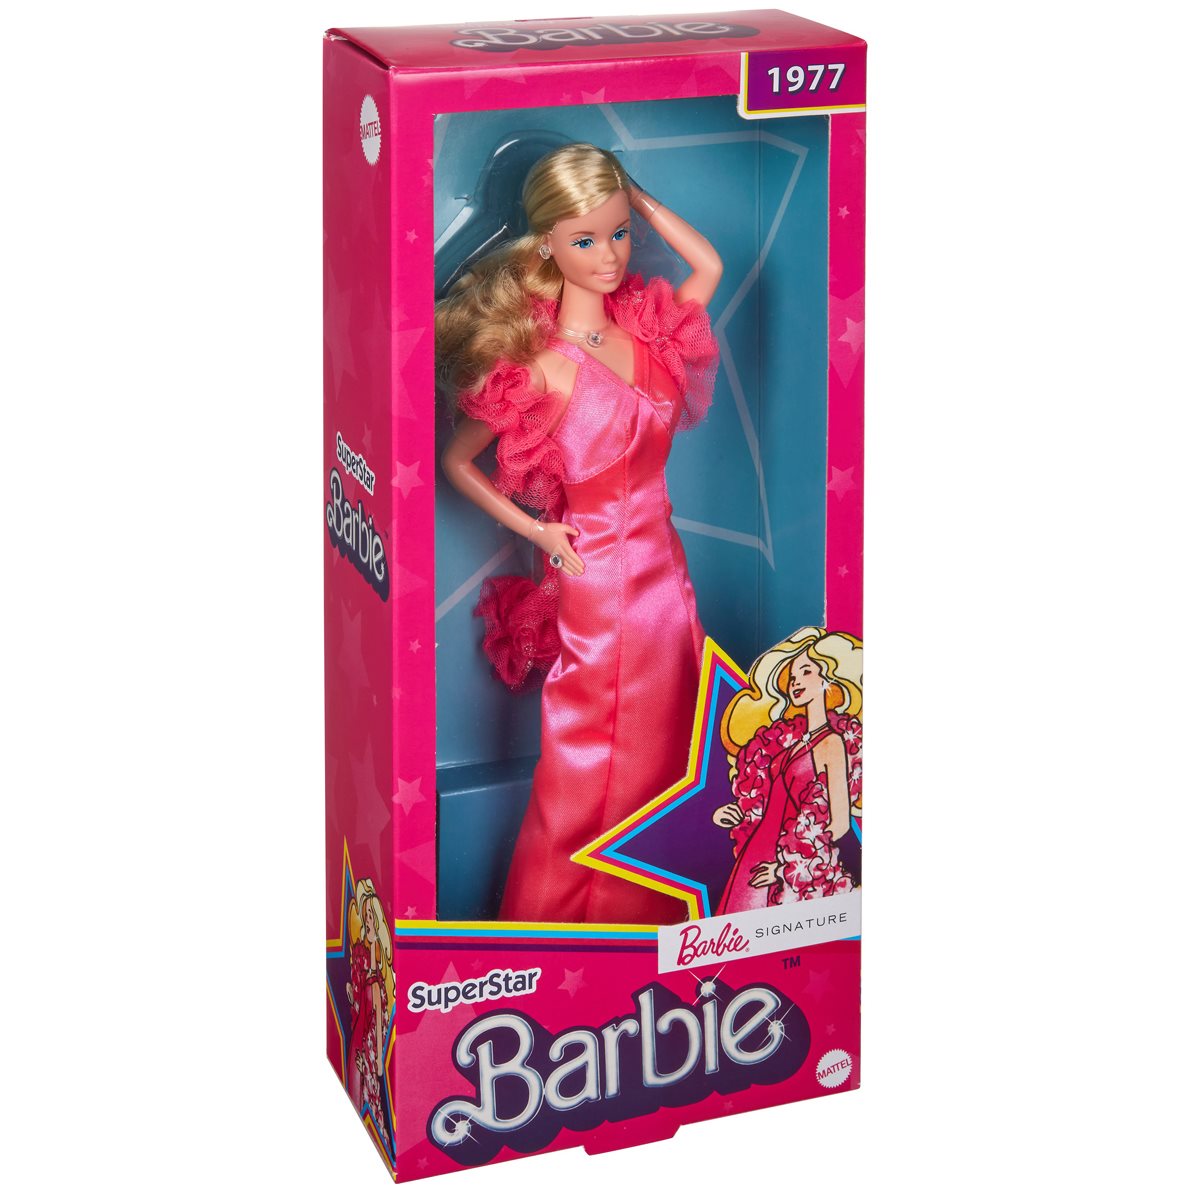 Respect Bedenken Farmacologie Barbie 1977 Superstar Barbie Doll - Entertainment Earth